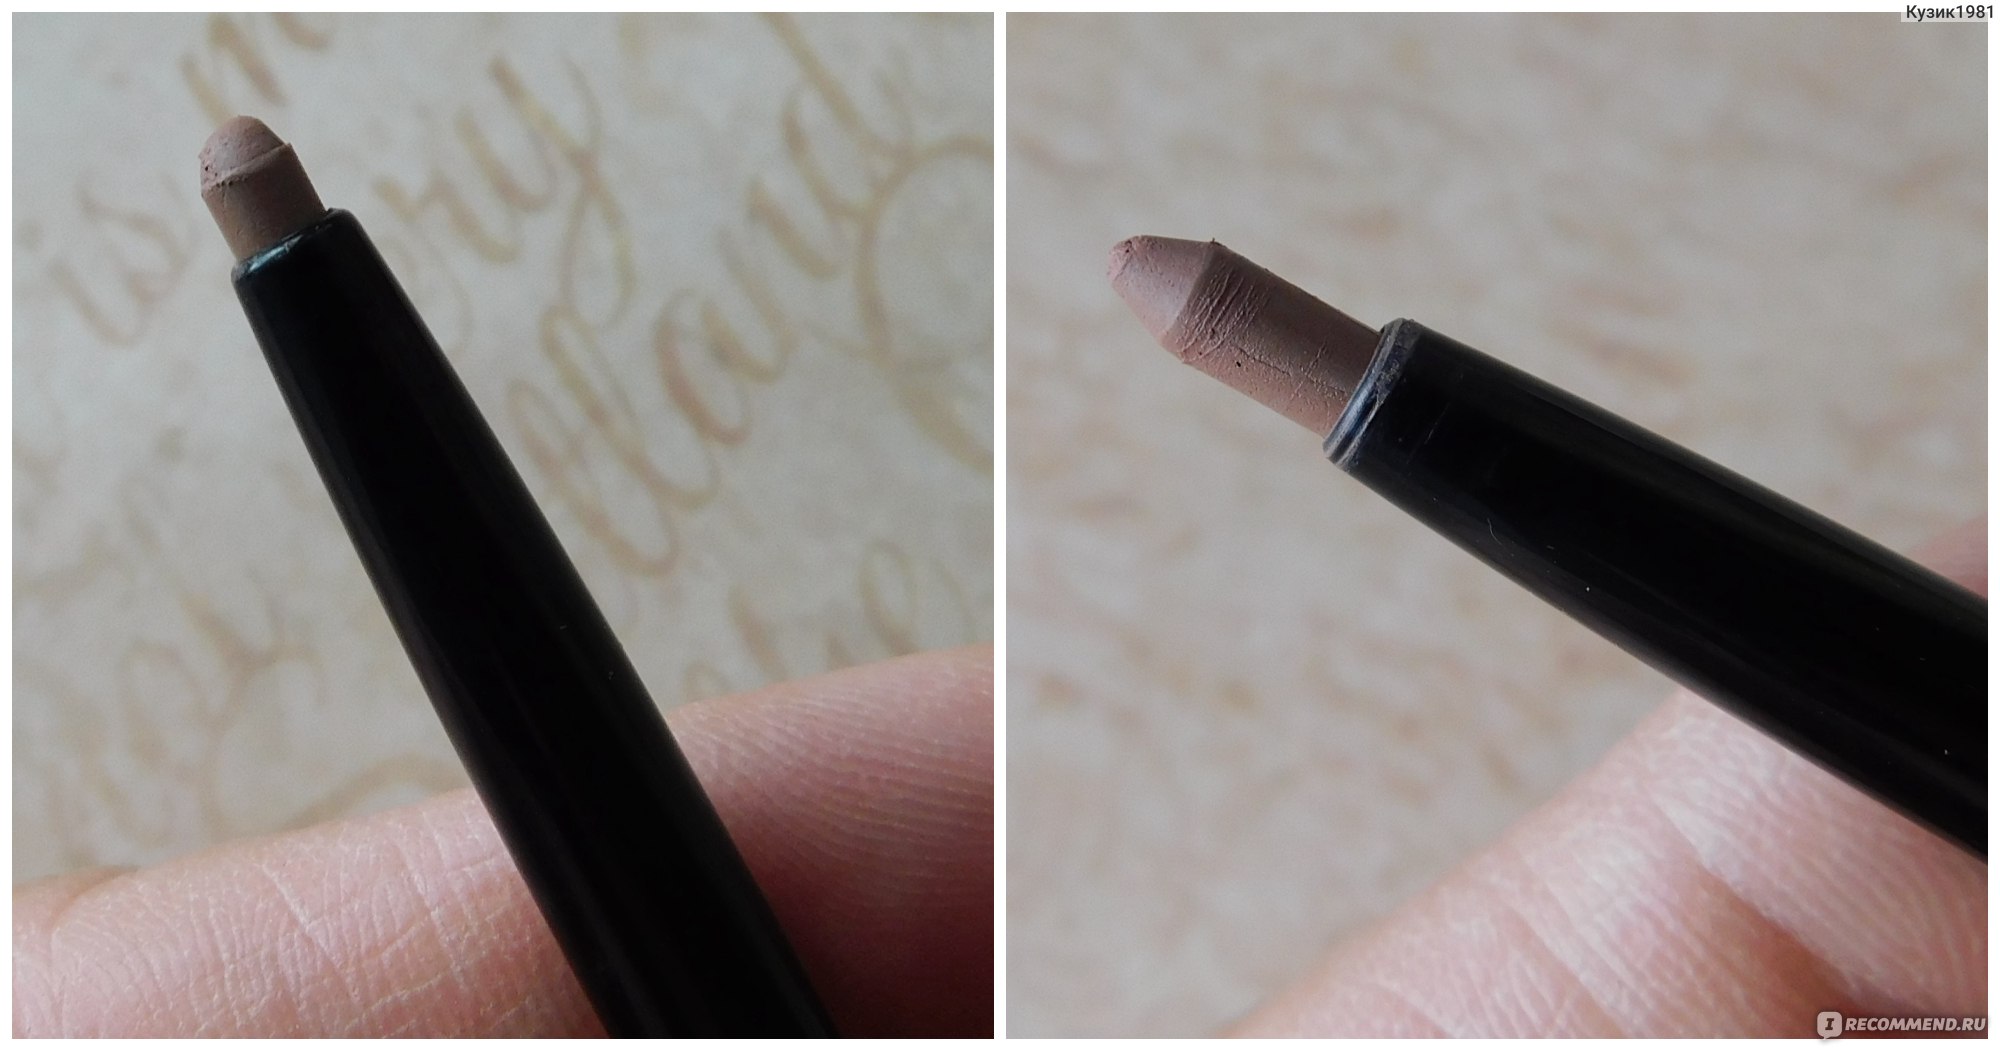 Автоматический карандаш для губ Faberlic Lip Shaper